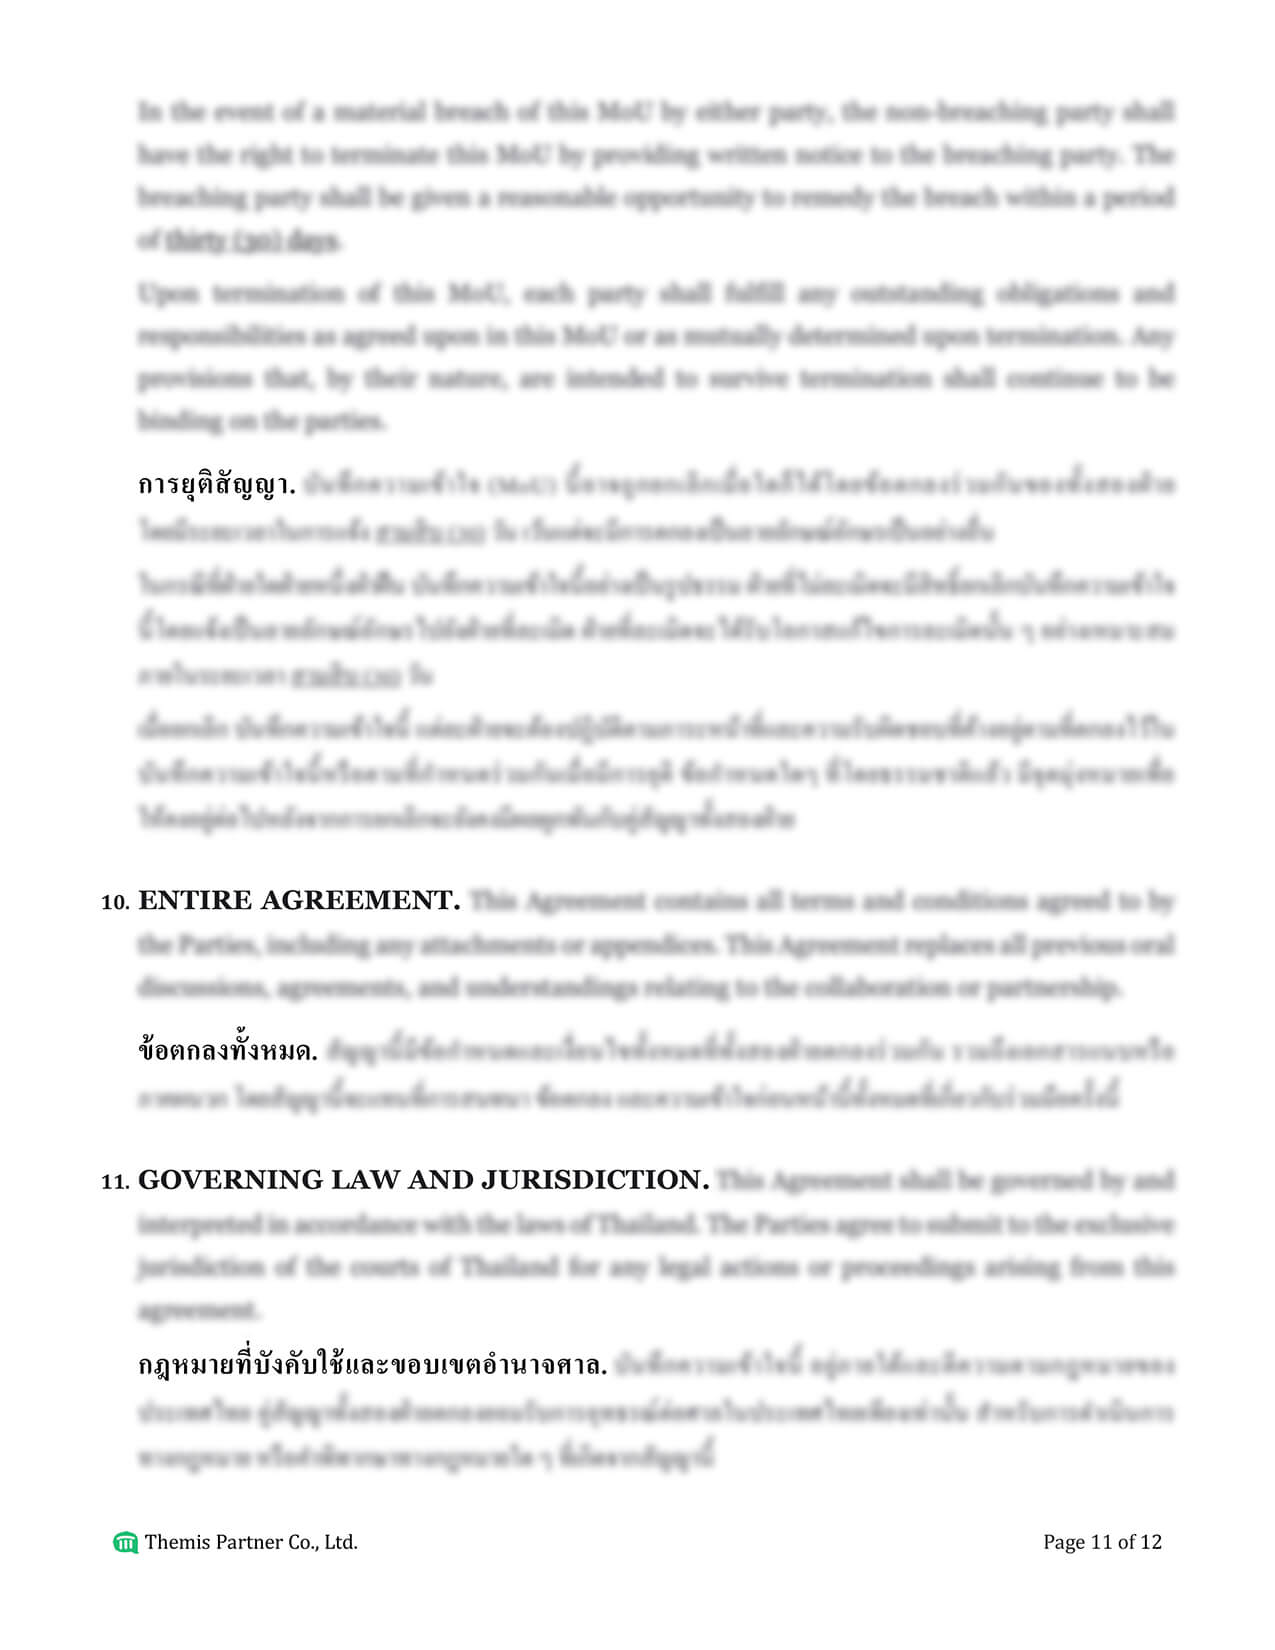 Memorandum of understanding Thailand 11